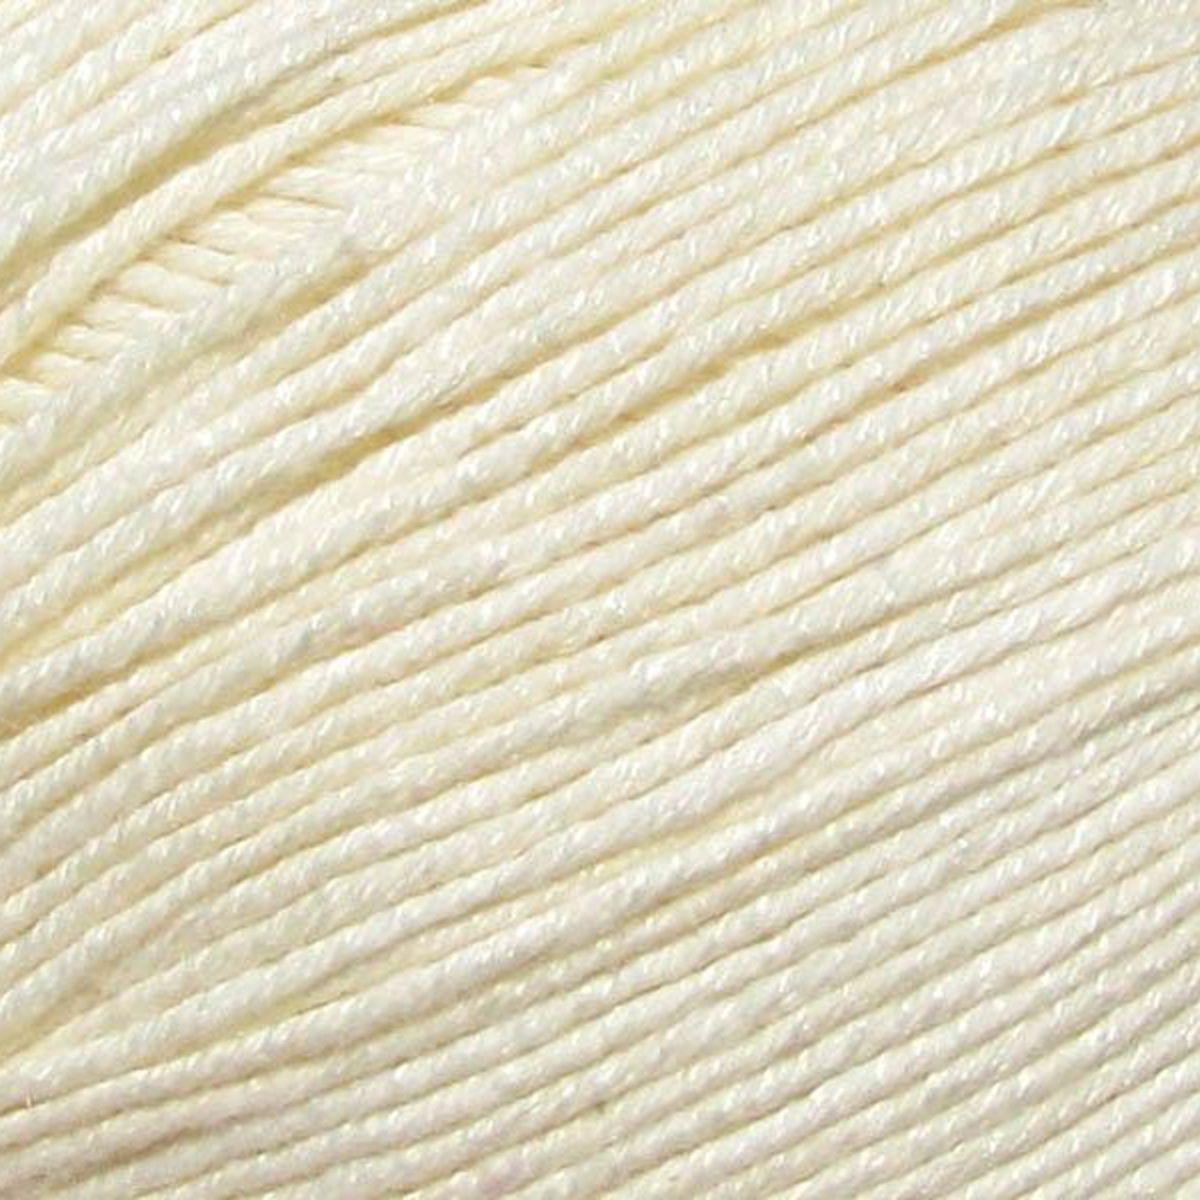 Universal Yarn-Bamboo Pop-yarn-102 Cream-gather here online